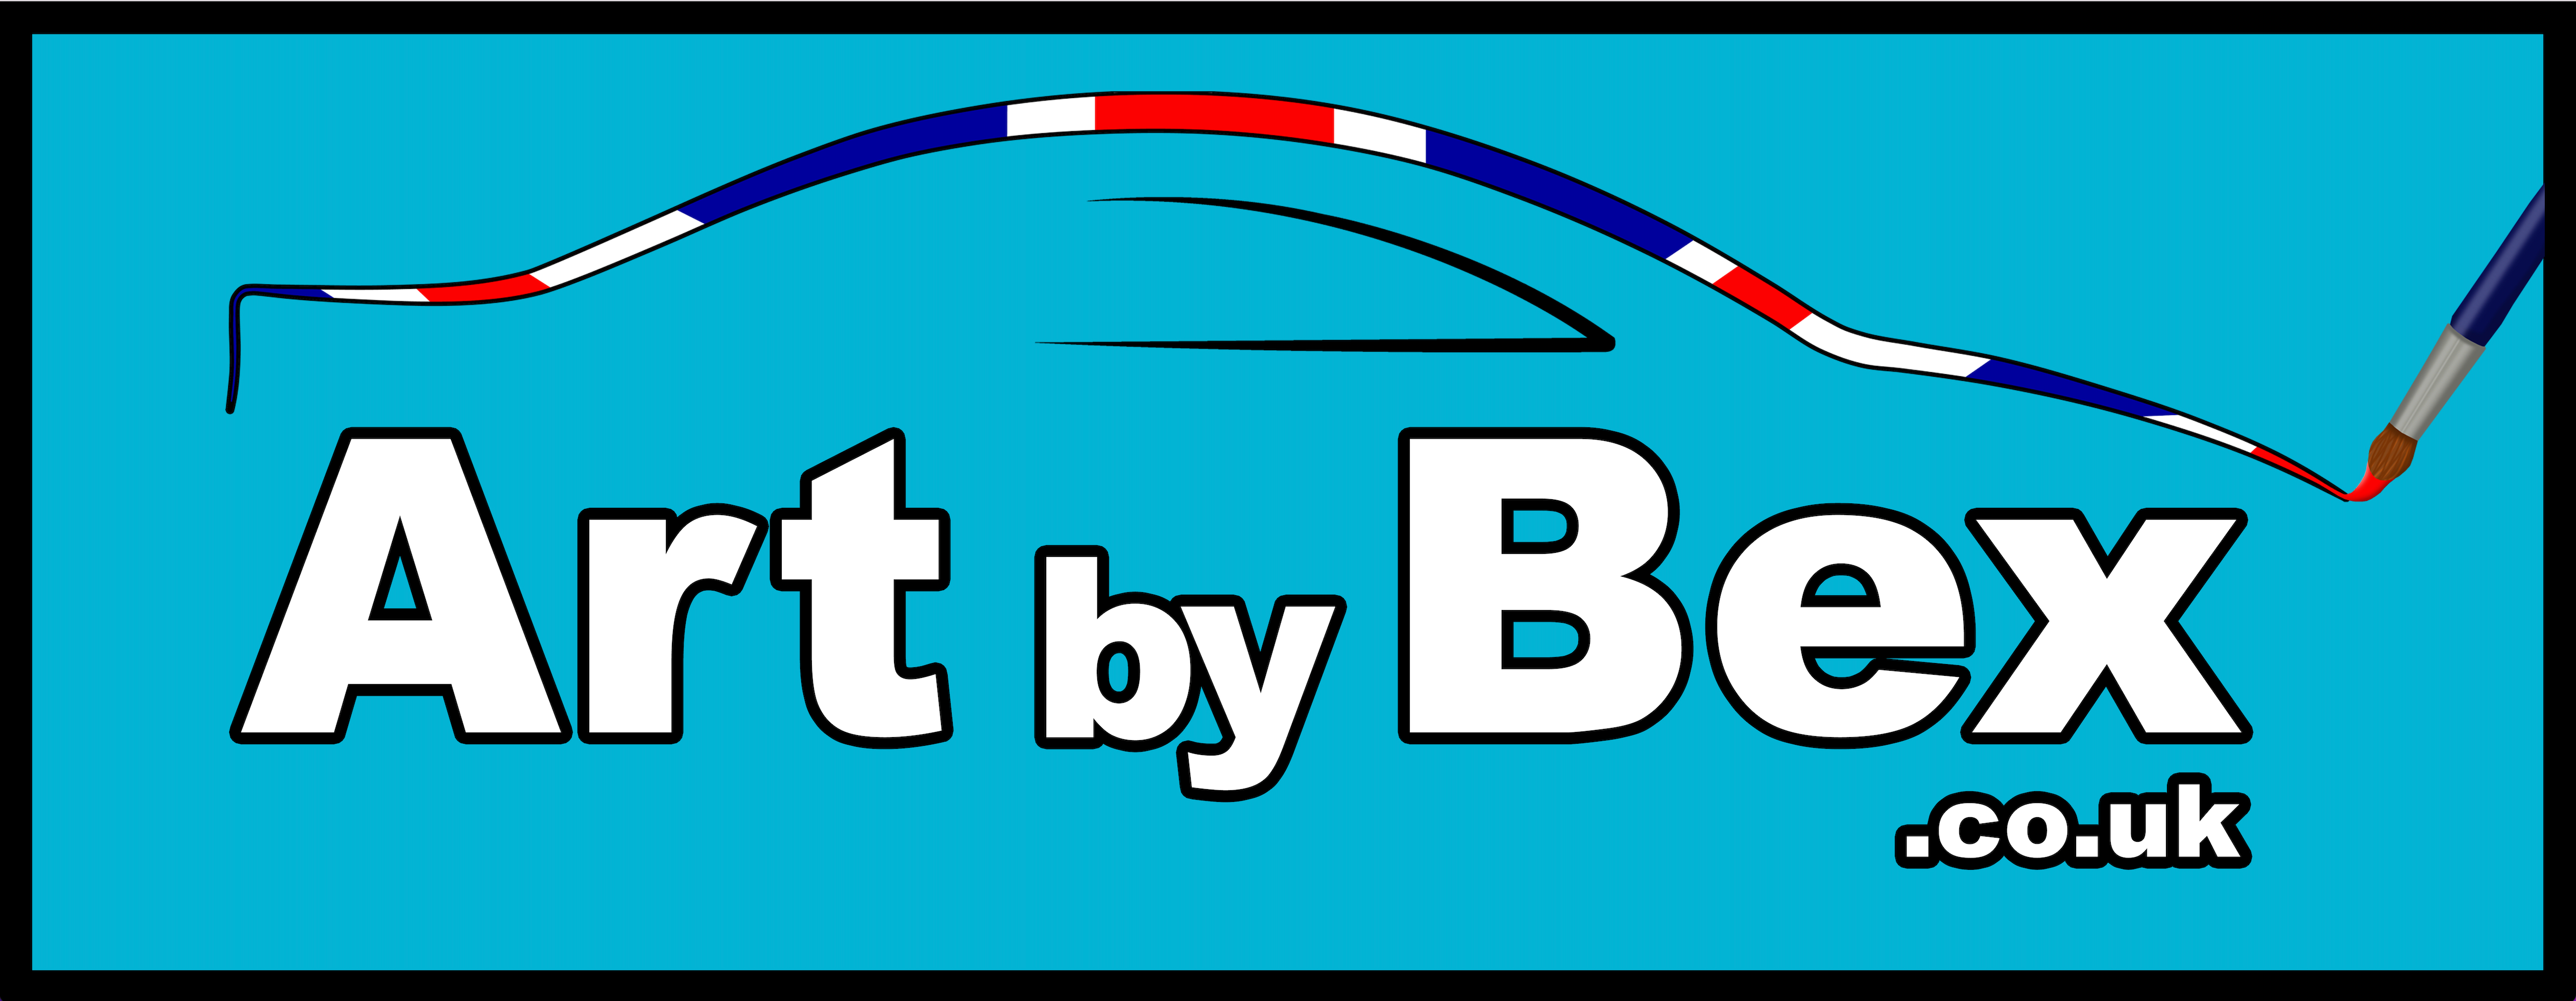 Art by Bex logo